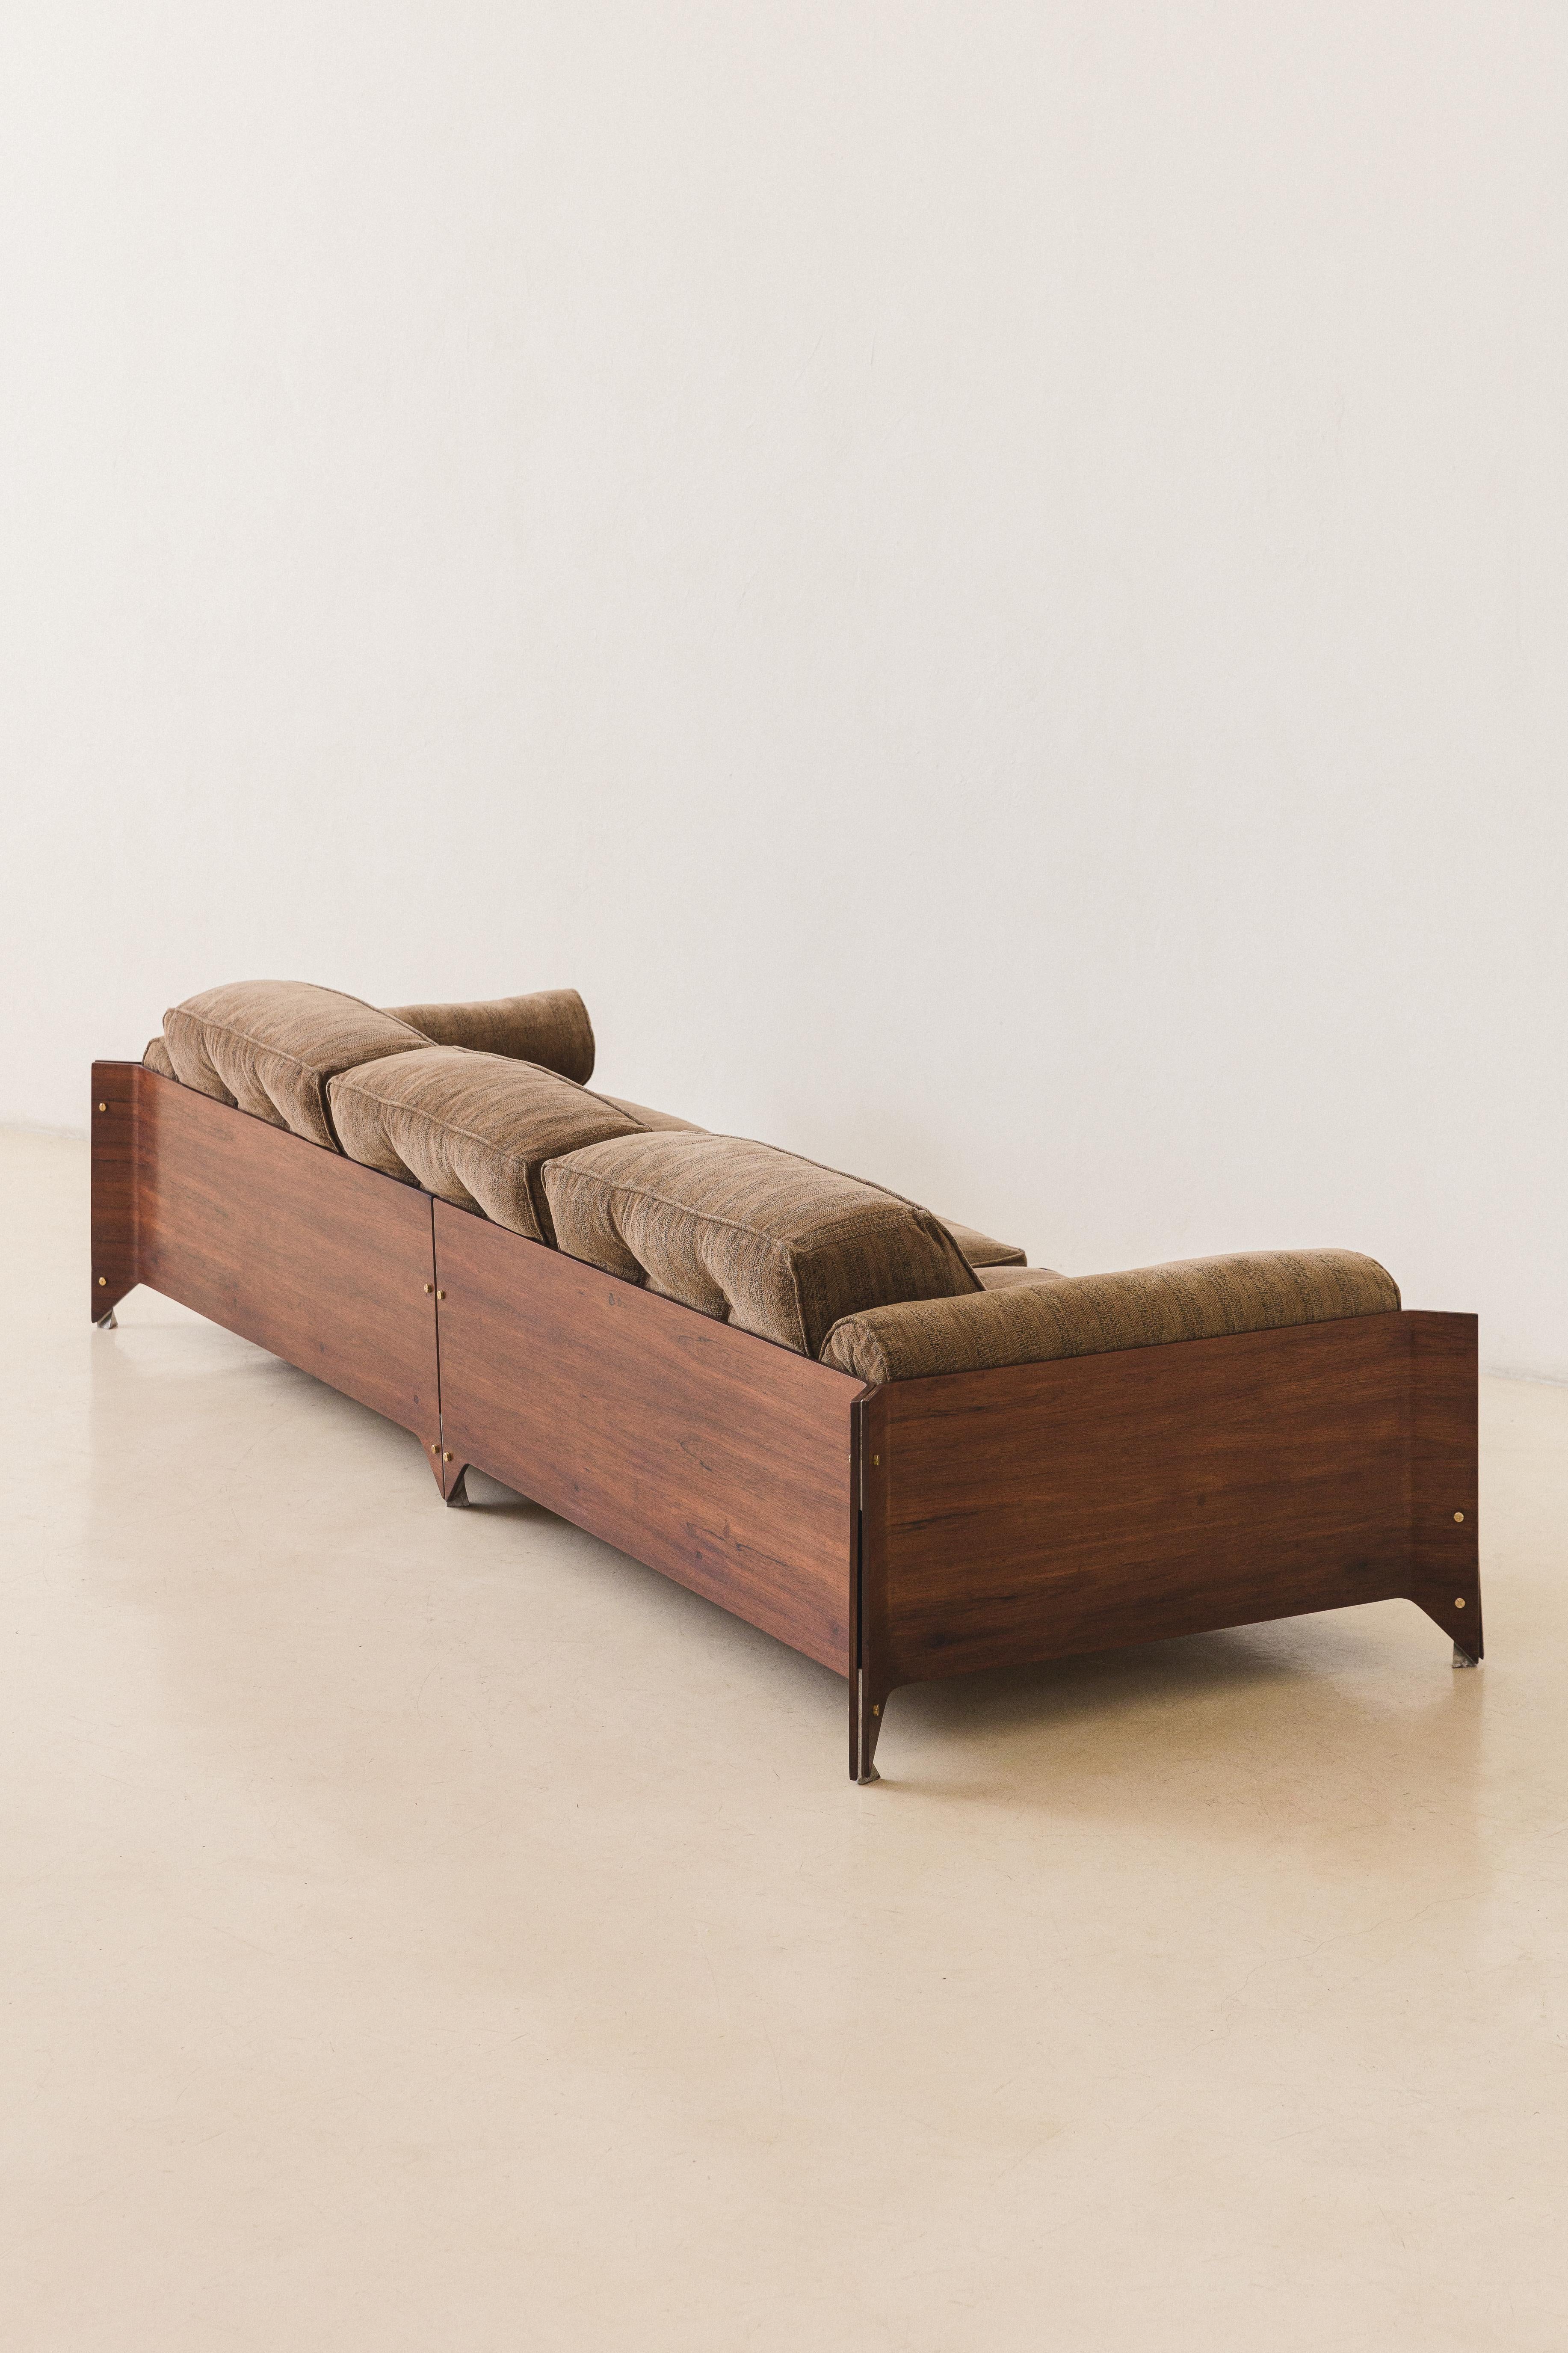 Brazilian Iconic Brasiliana Sofa Design by Jorge Zalszupin, Rosewood and Brass, 1960s For Sale